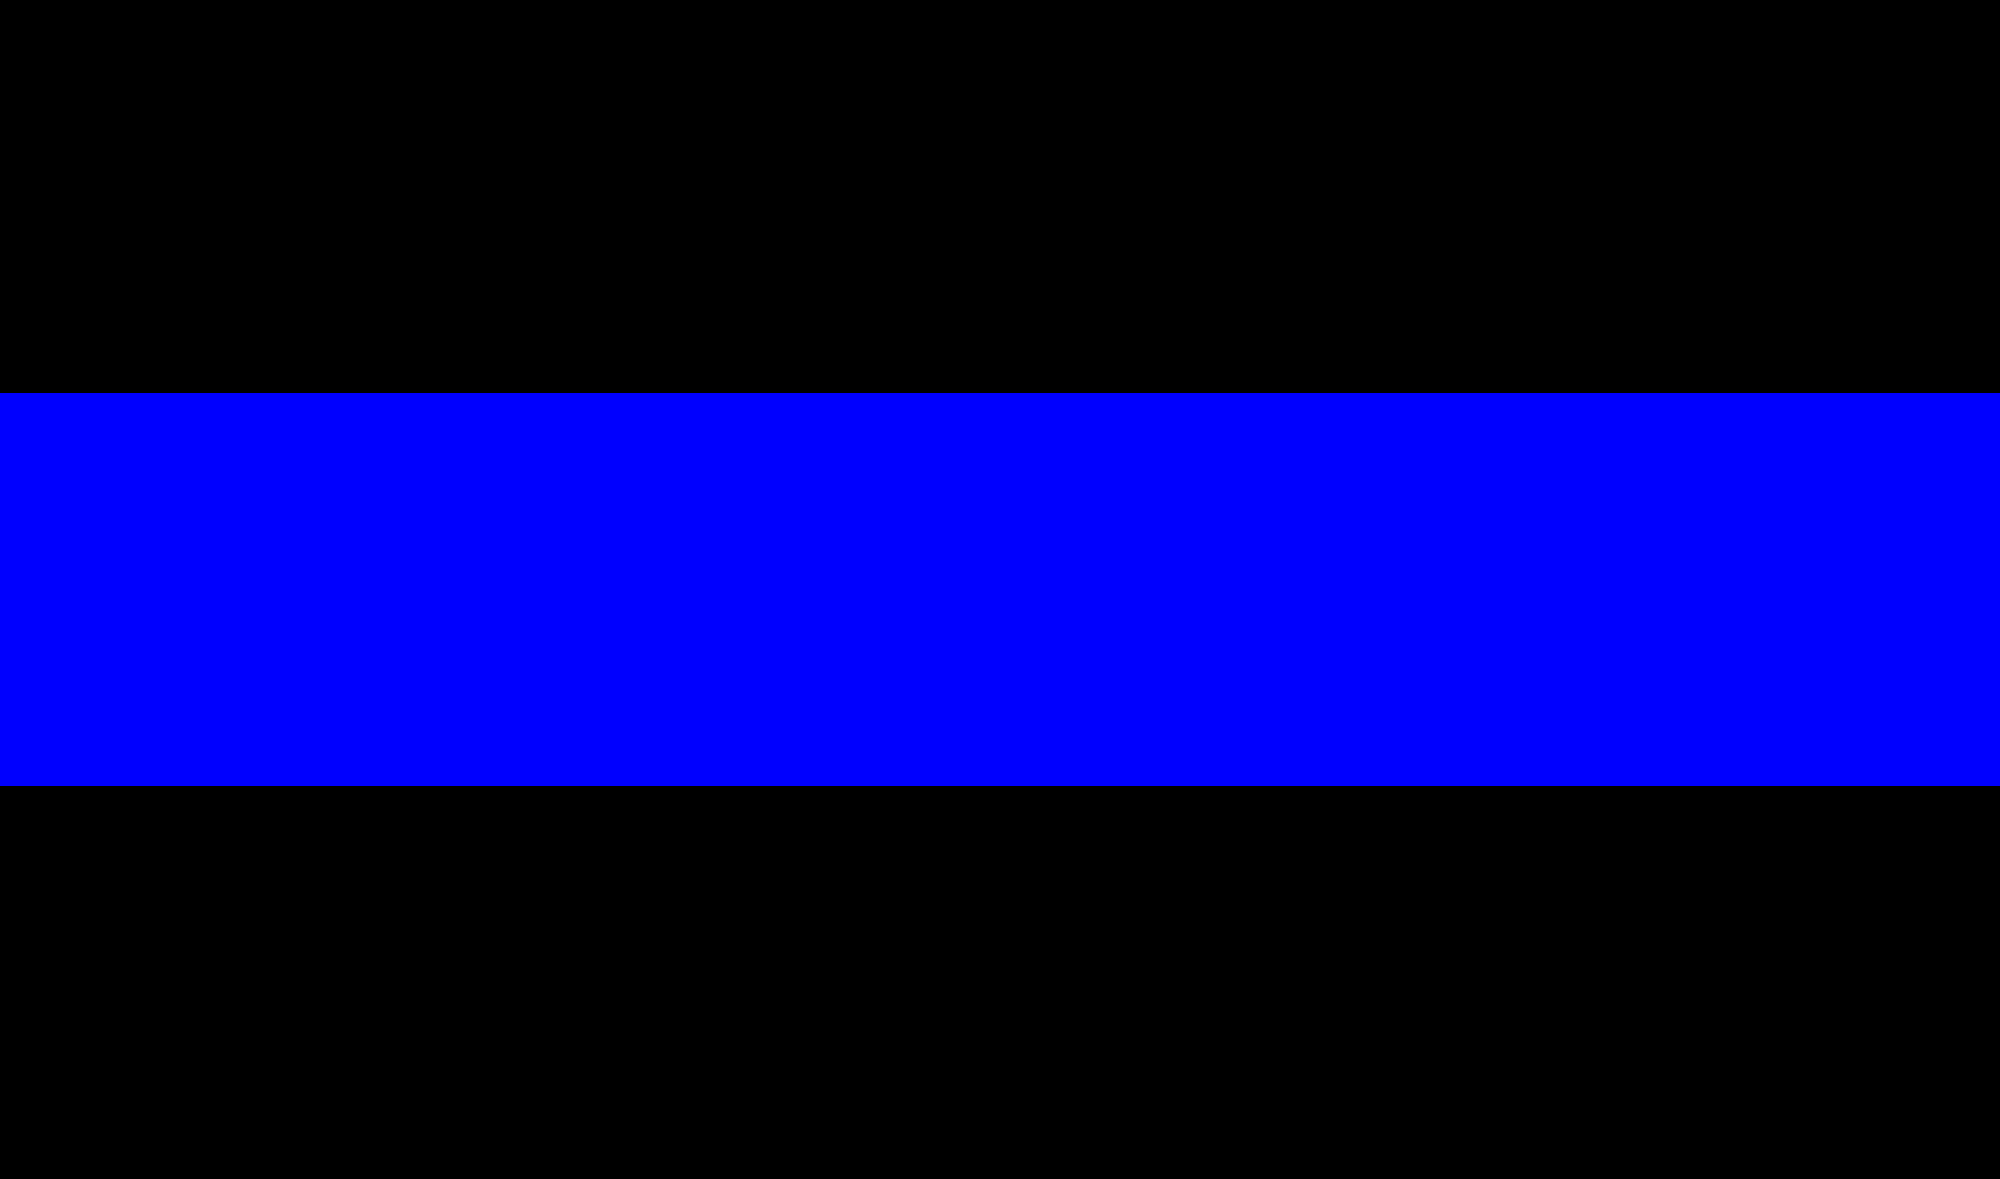 Woof Law Enforcement Thin Blue Line Flag Mario Bross